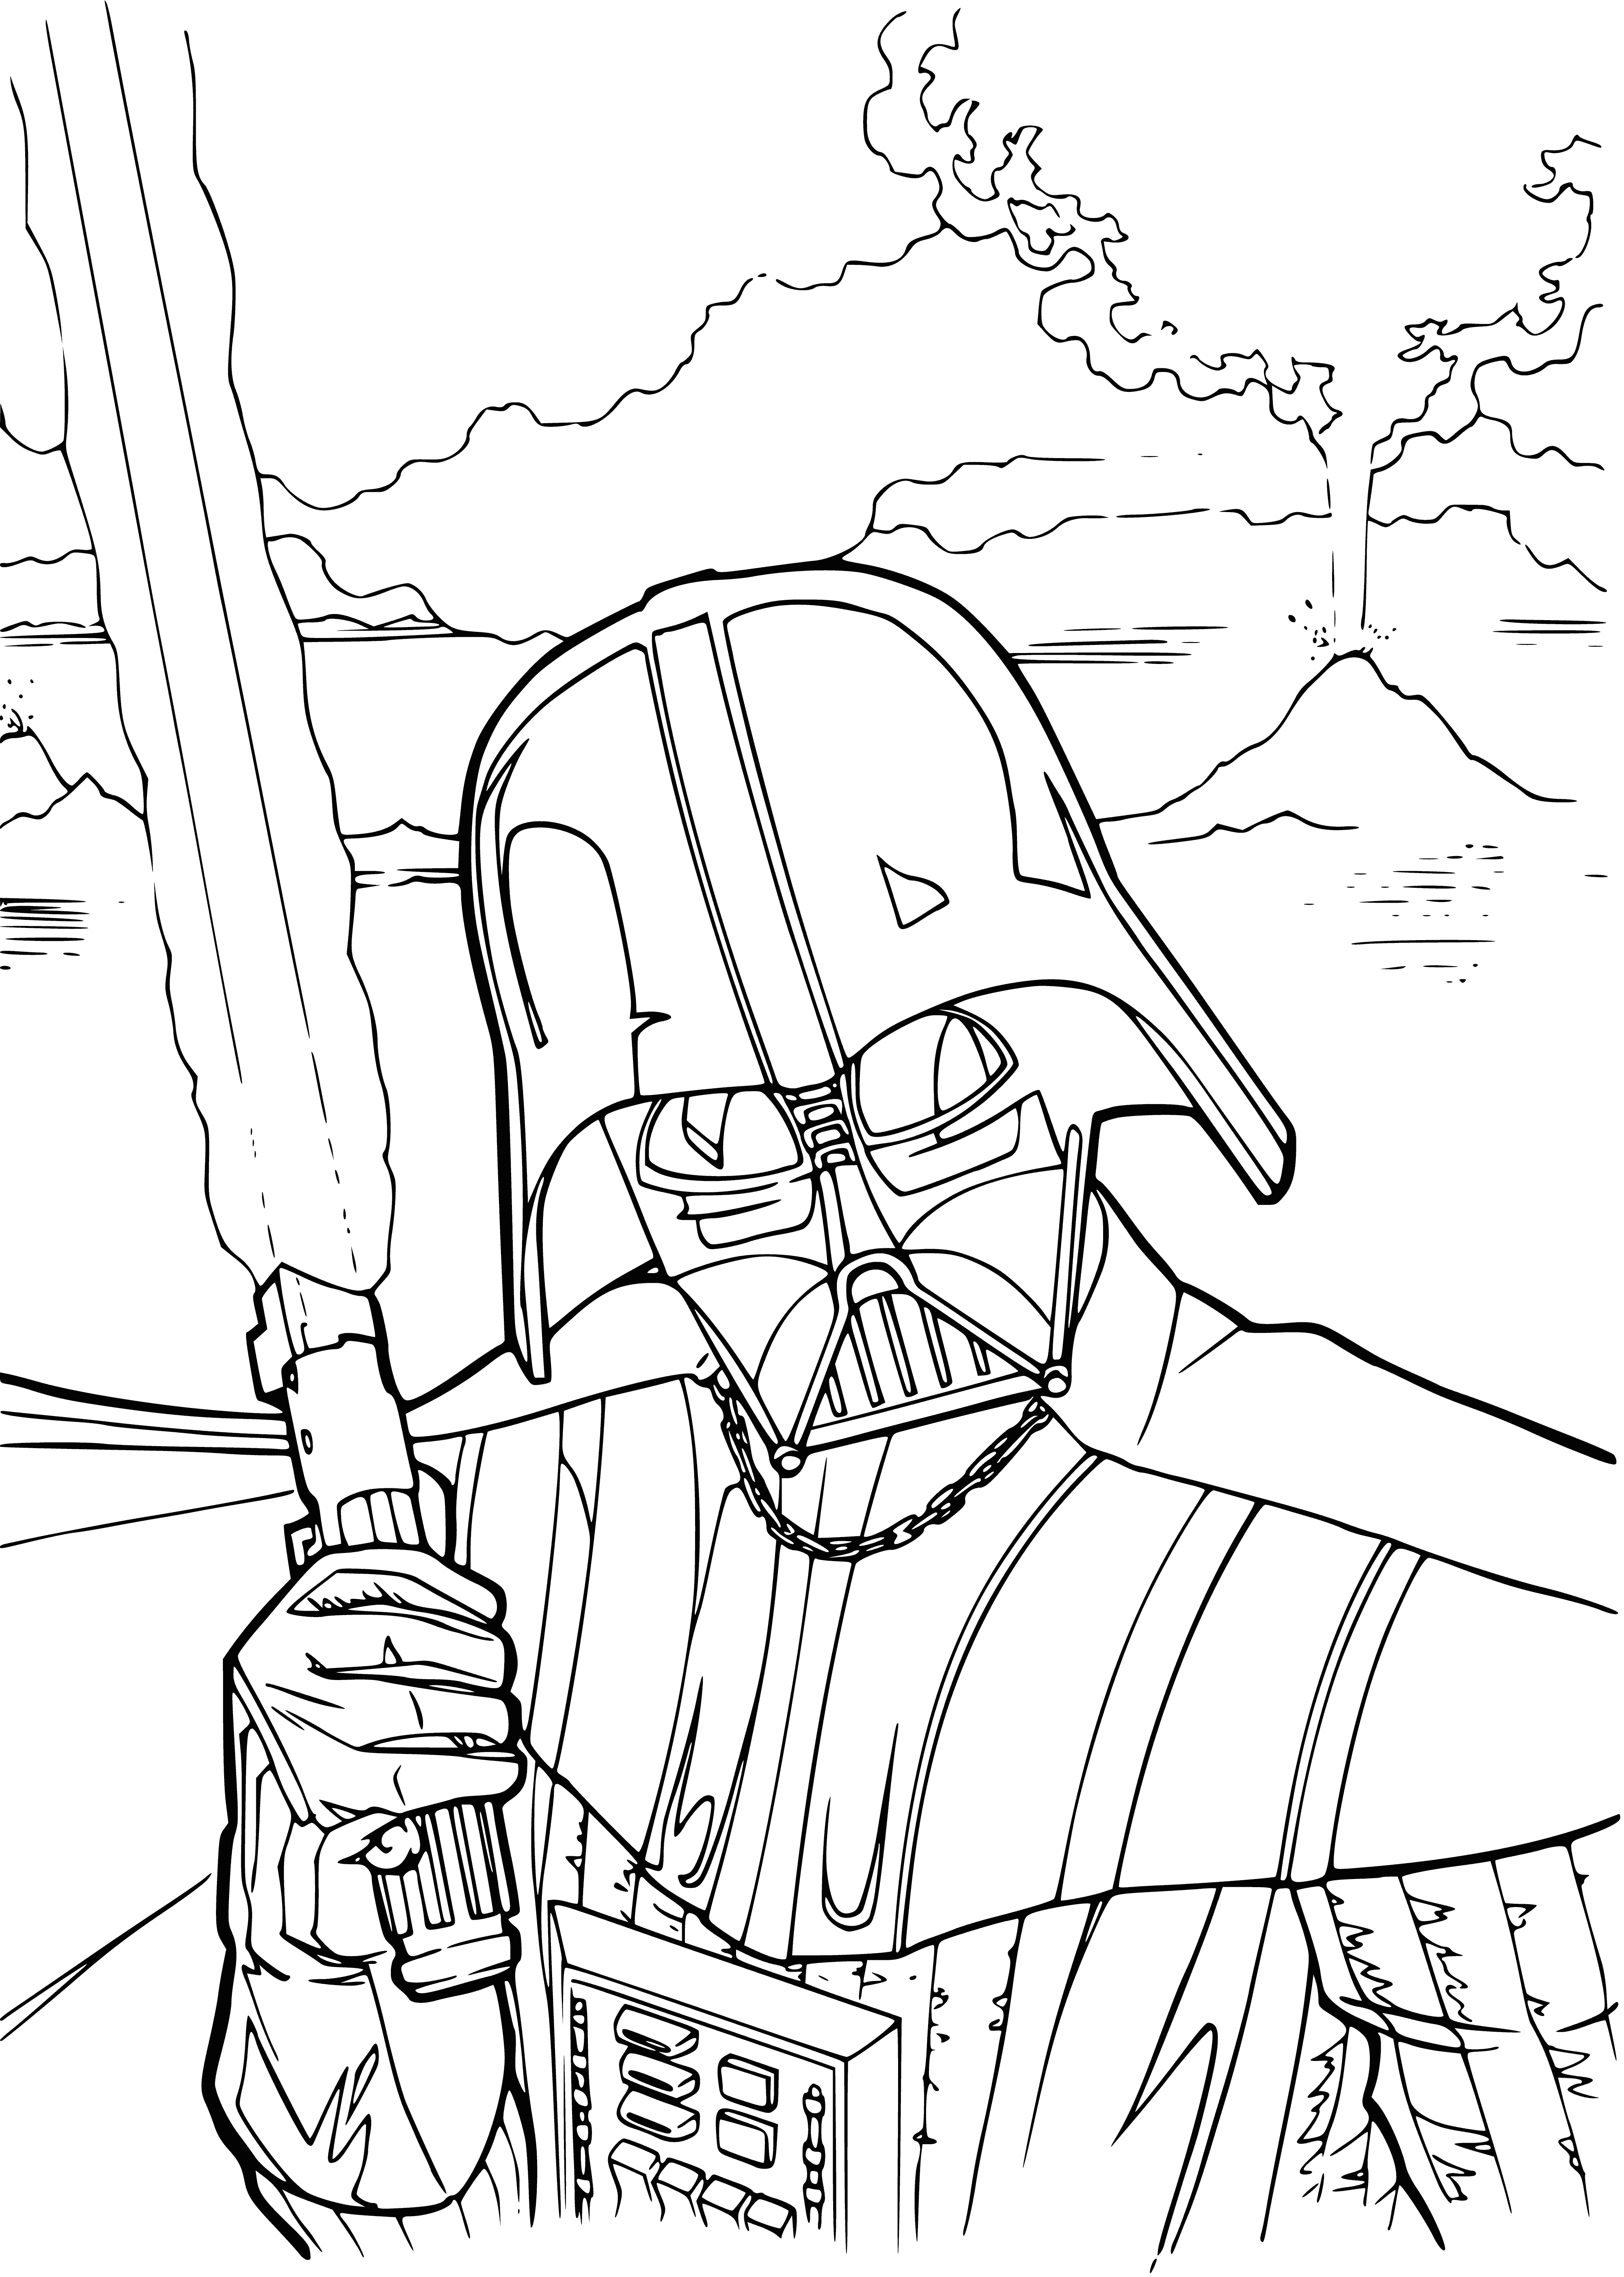 Lord Sith Darth Vader coloring page